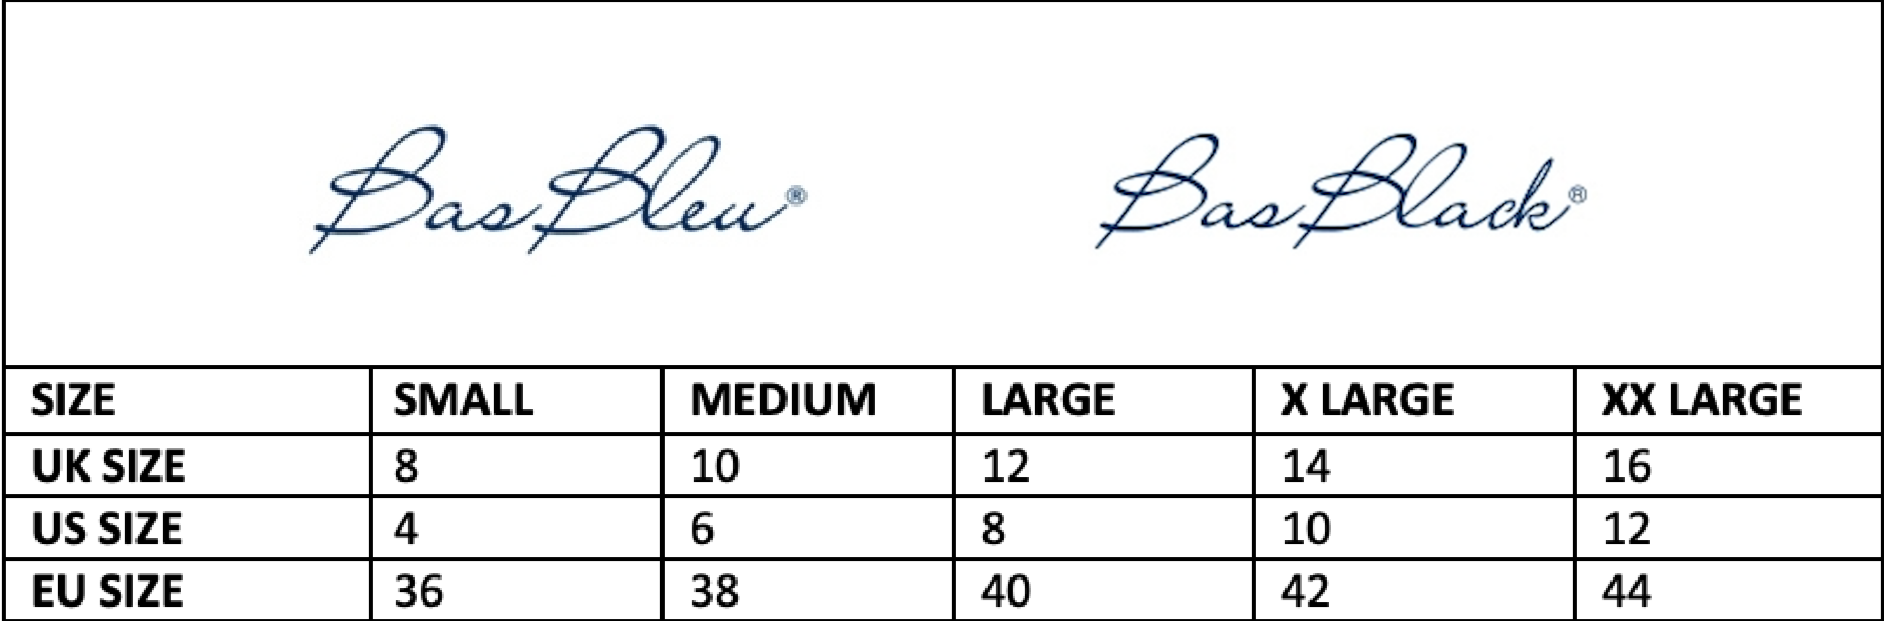 BasBlack - Size Chart